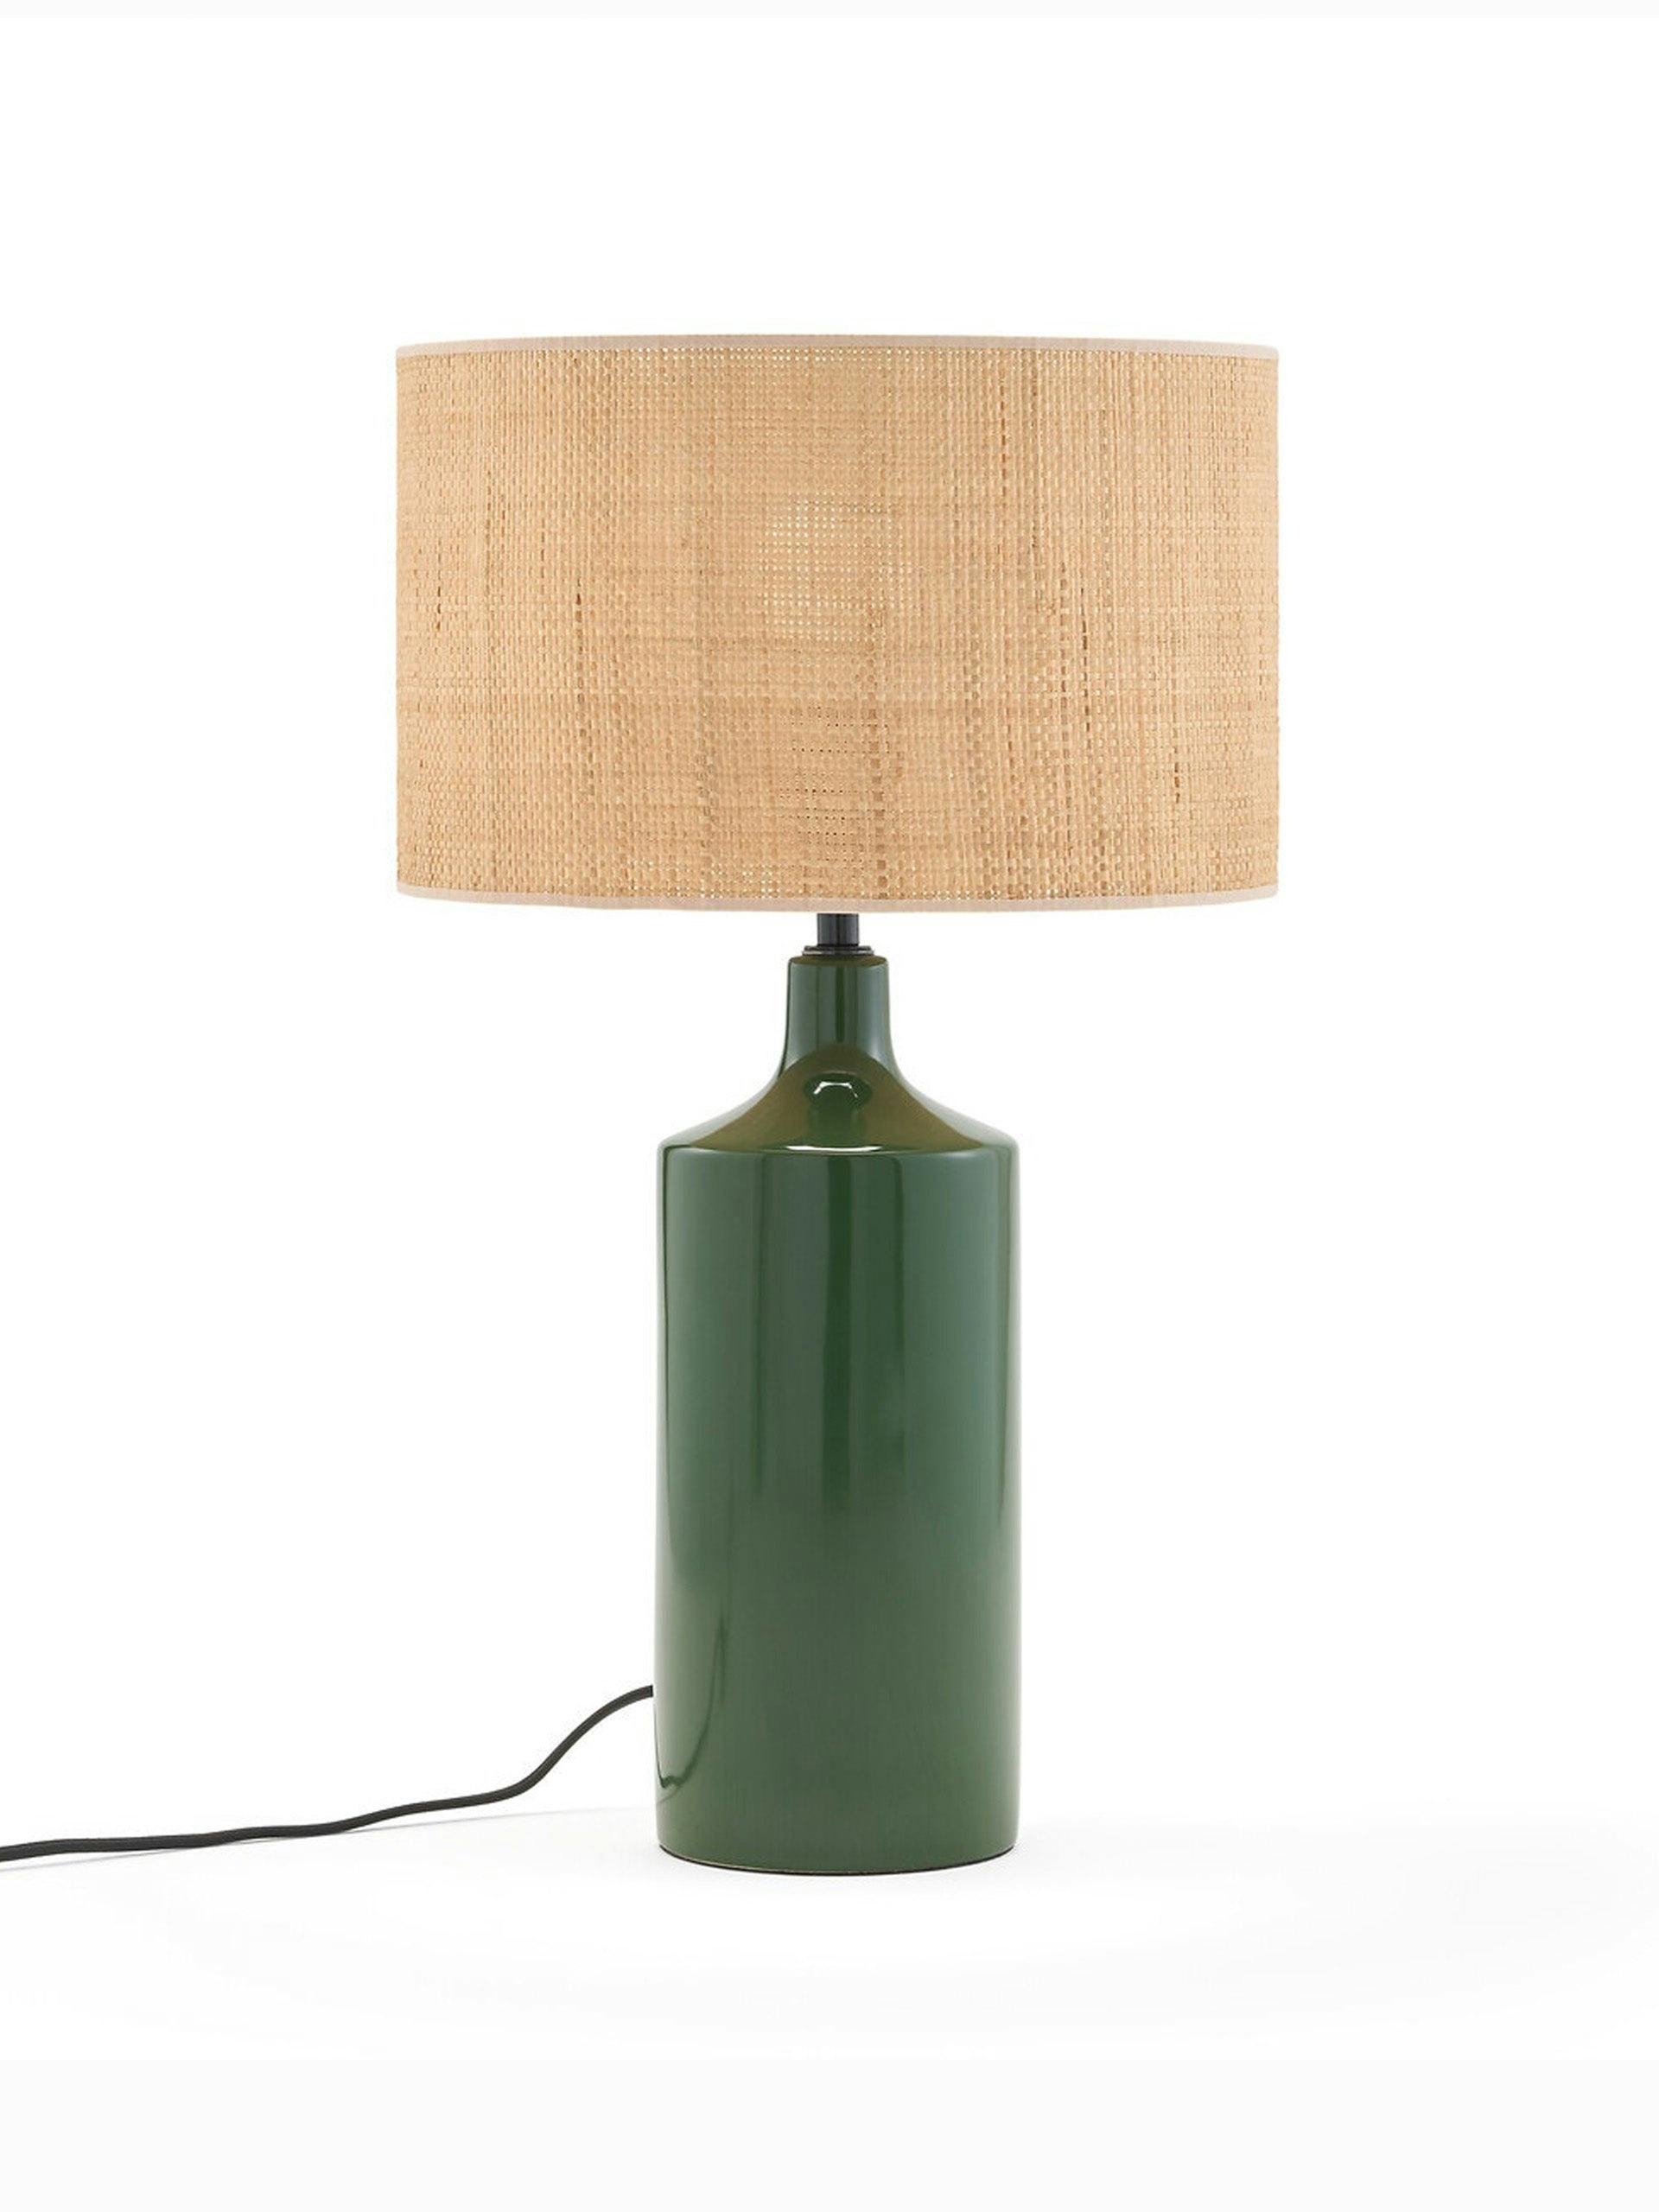 Green ceramic and raffia table lamp